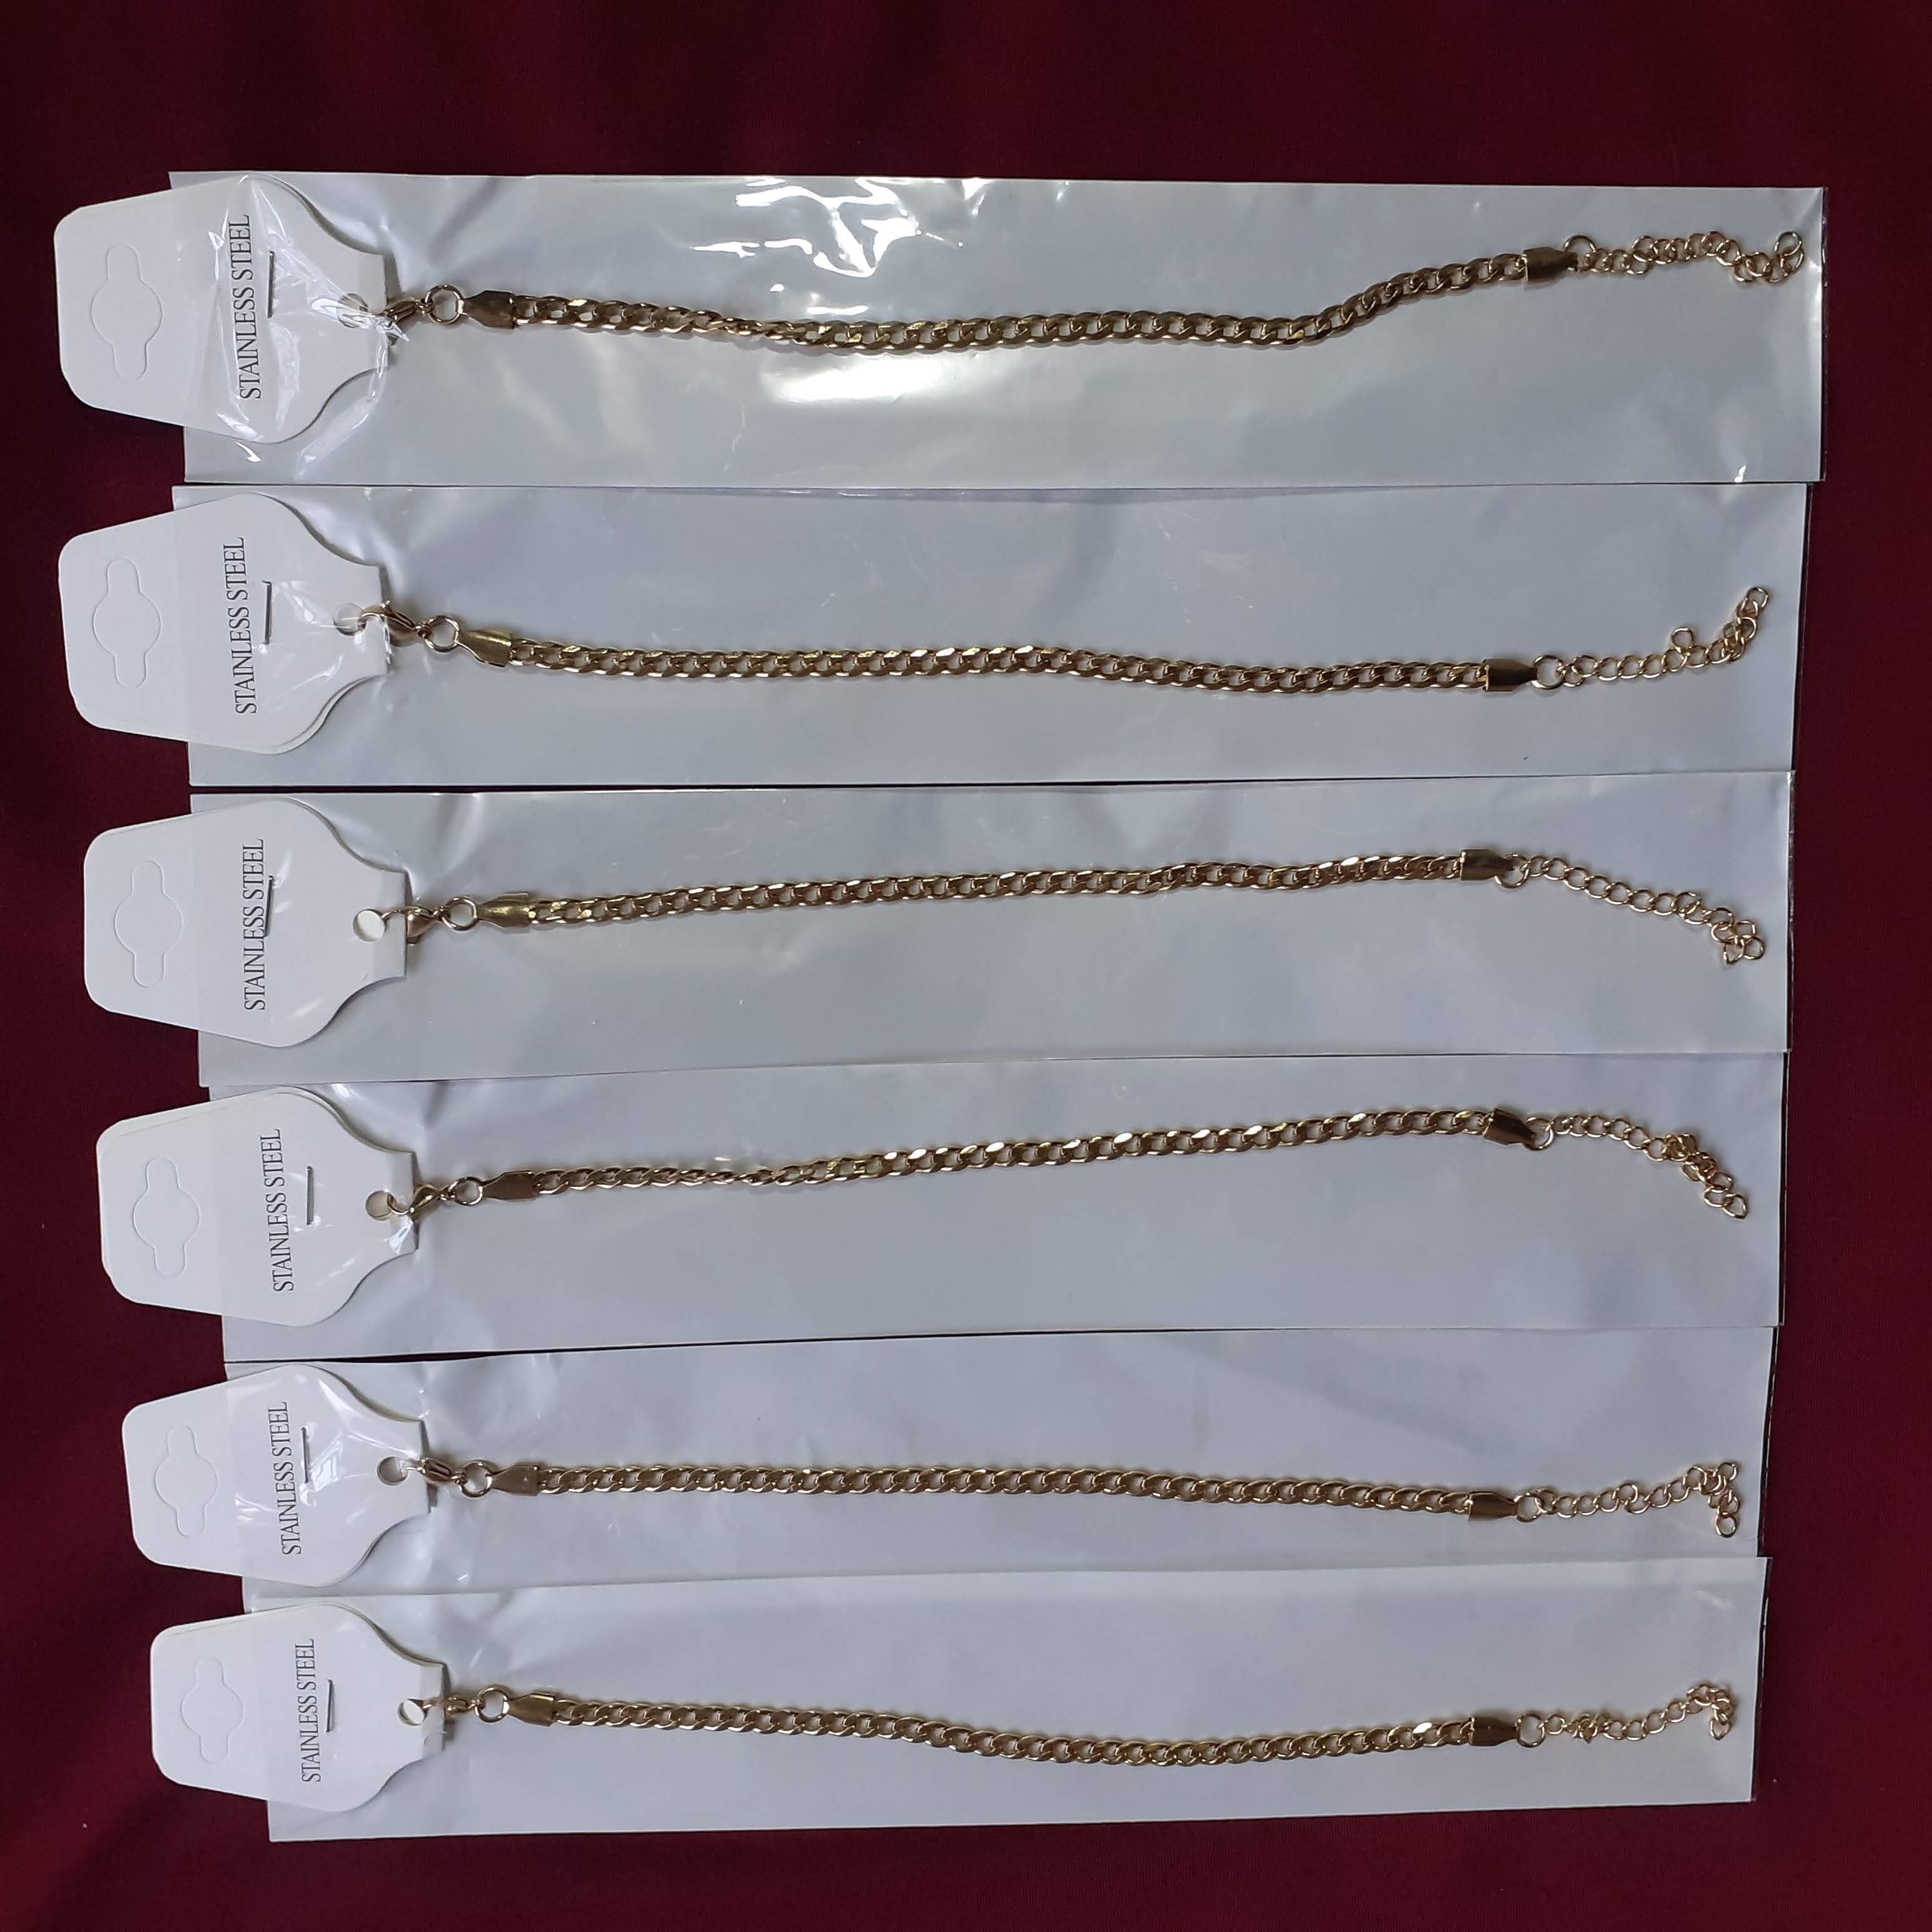 12 Pulseras doradas de cadena de acero inoxidable (25 cm)